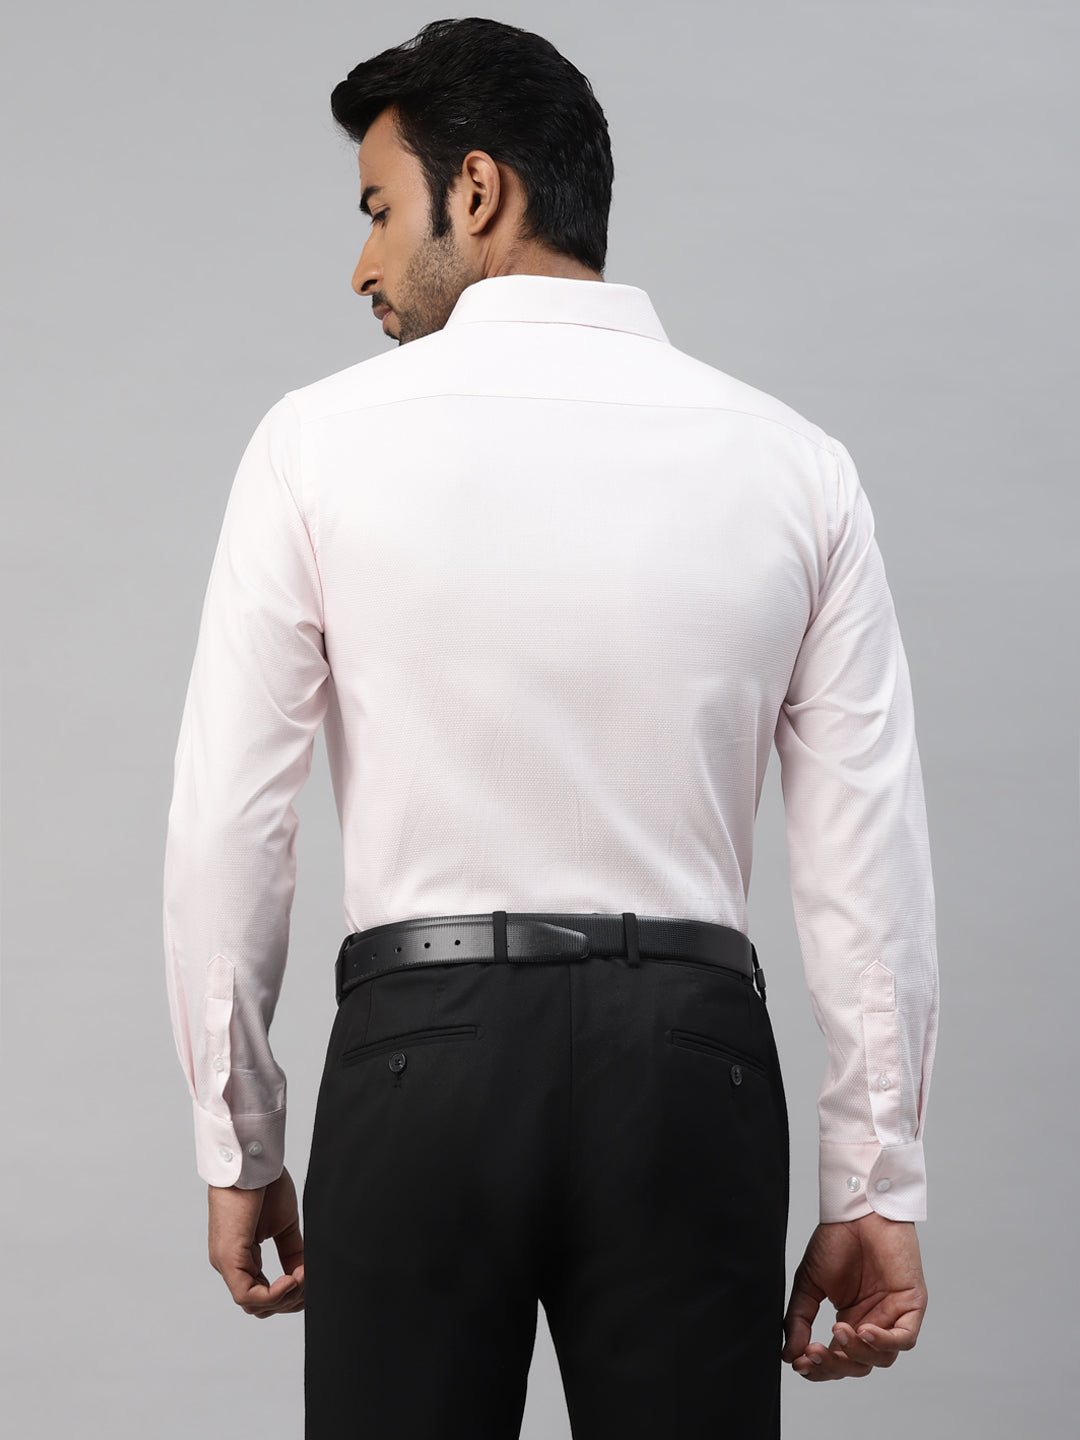 Don Vino Men's Solid Slim Fit Shirt